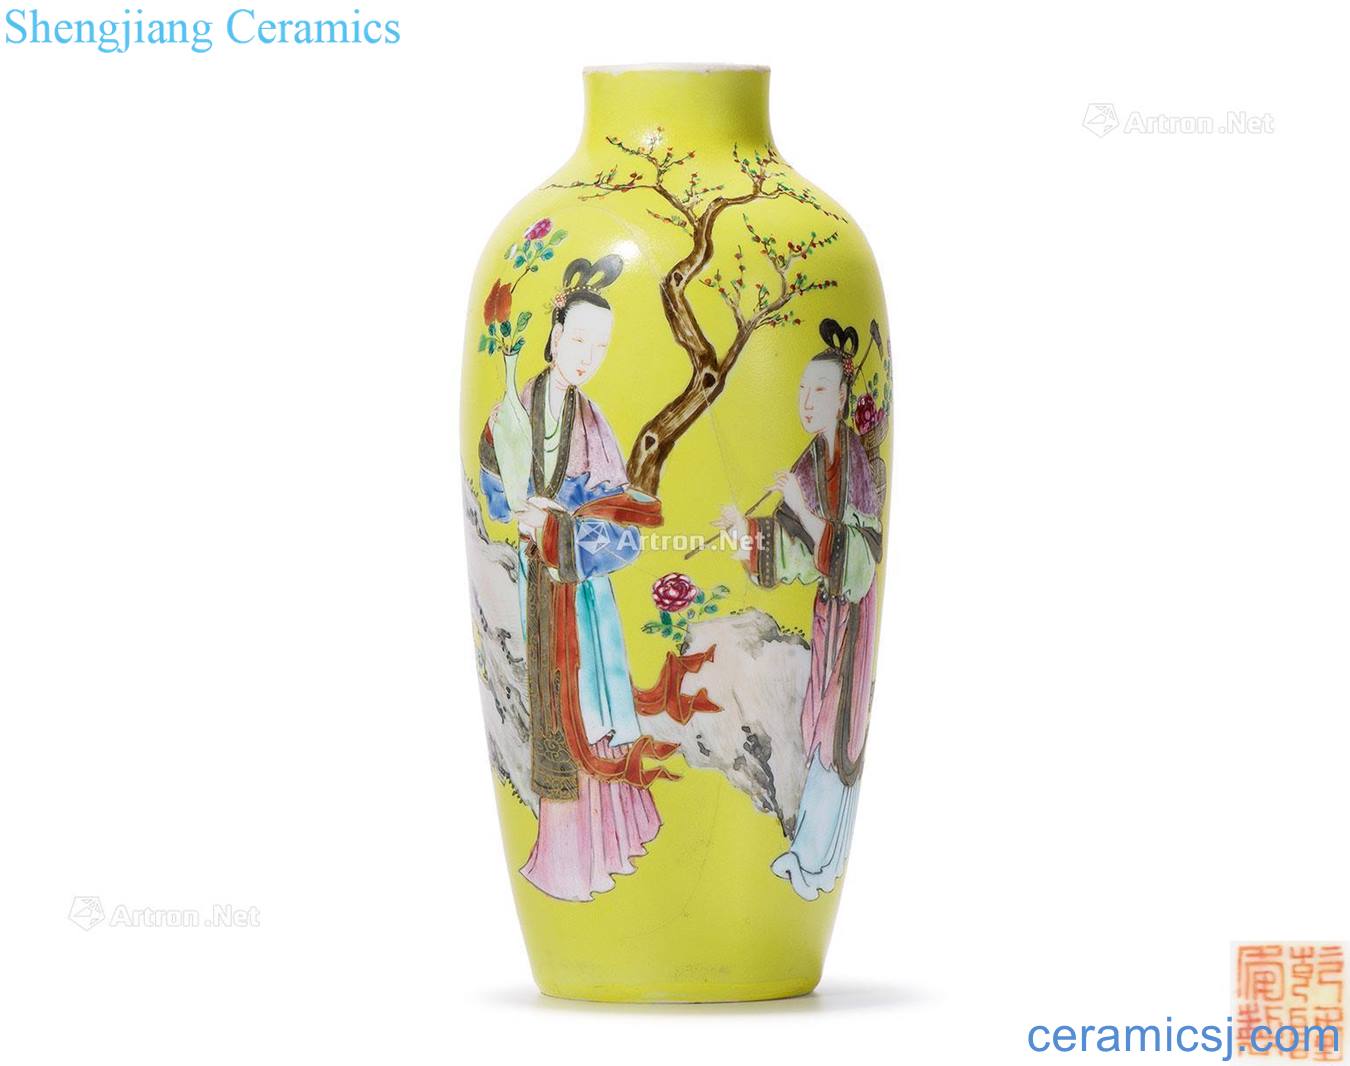 Qing qianlong to pastel yellow bottle had